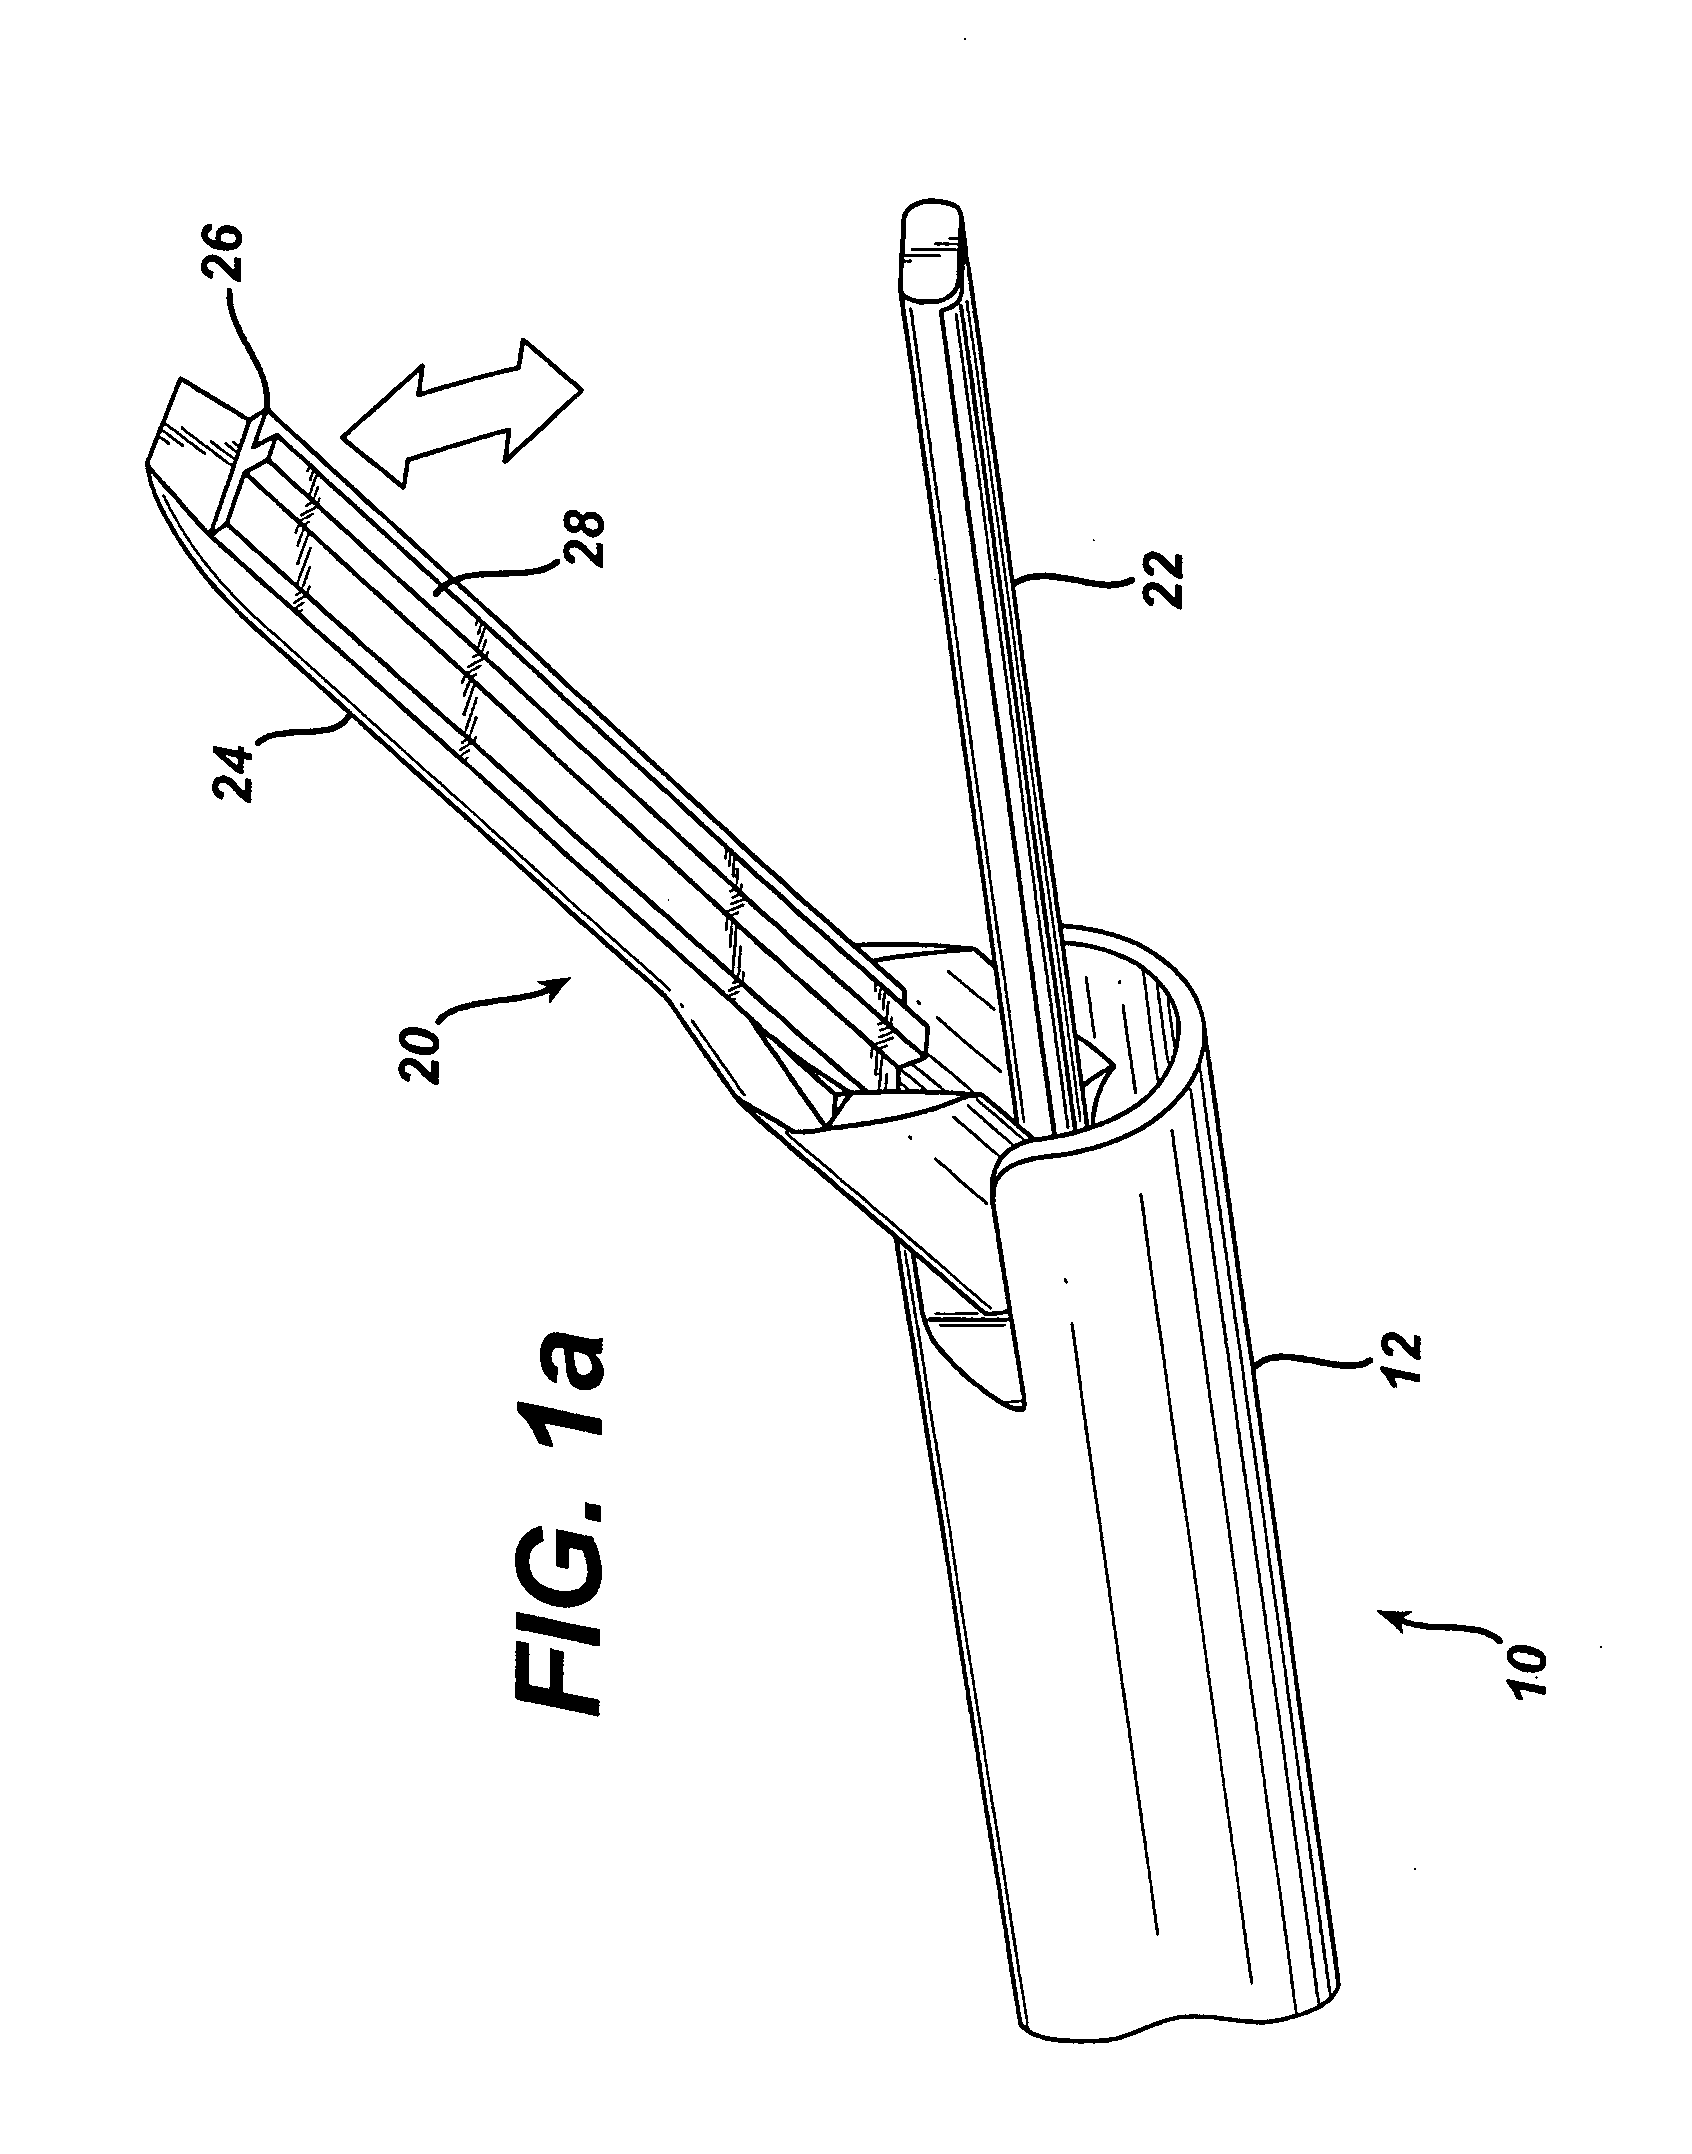 Ultrasonic clamp coagulator apparatus having an improved clamping end-effector